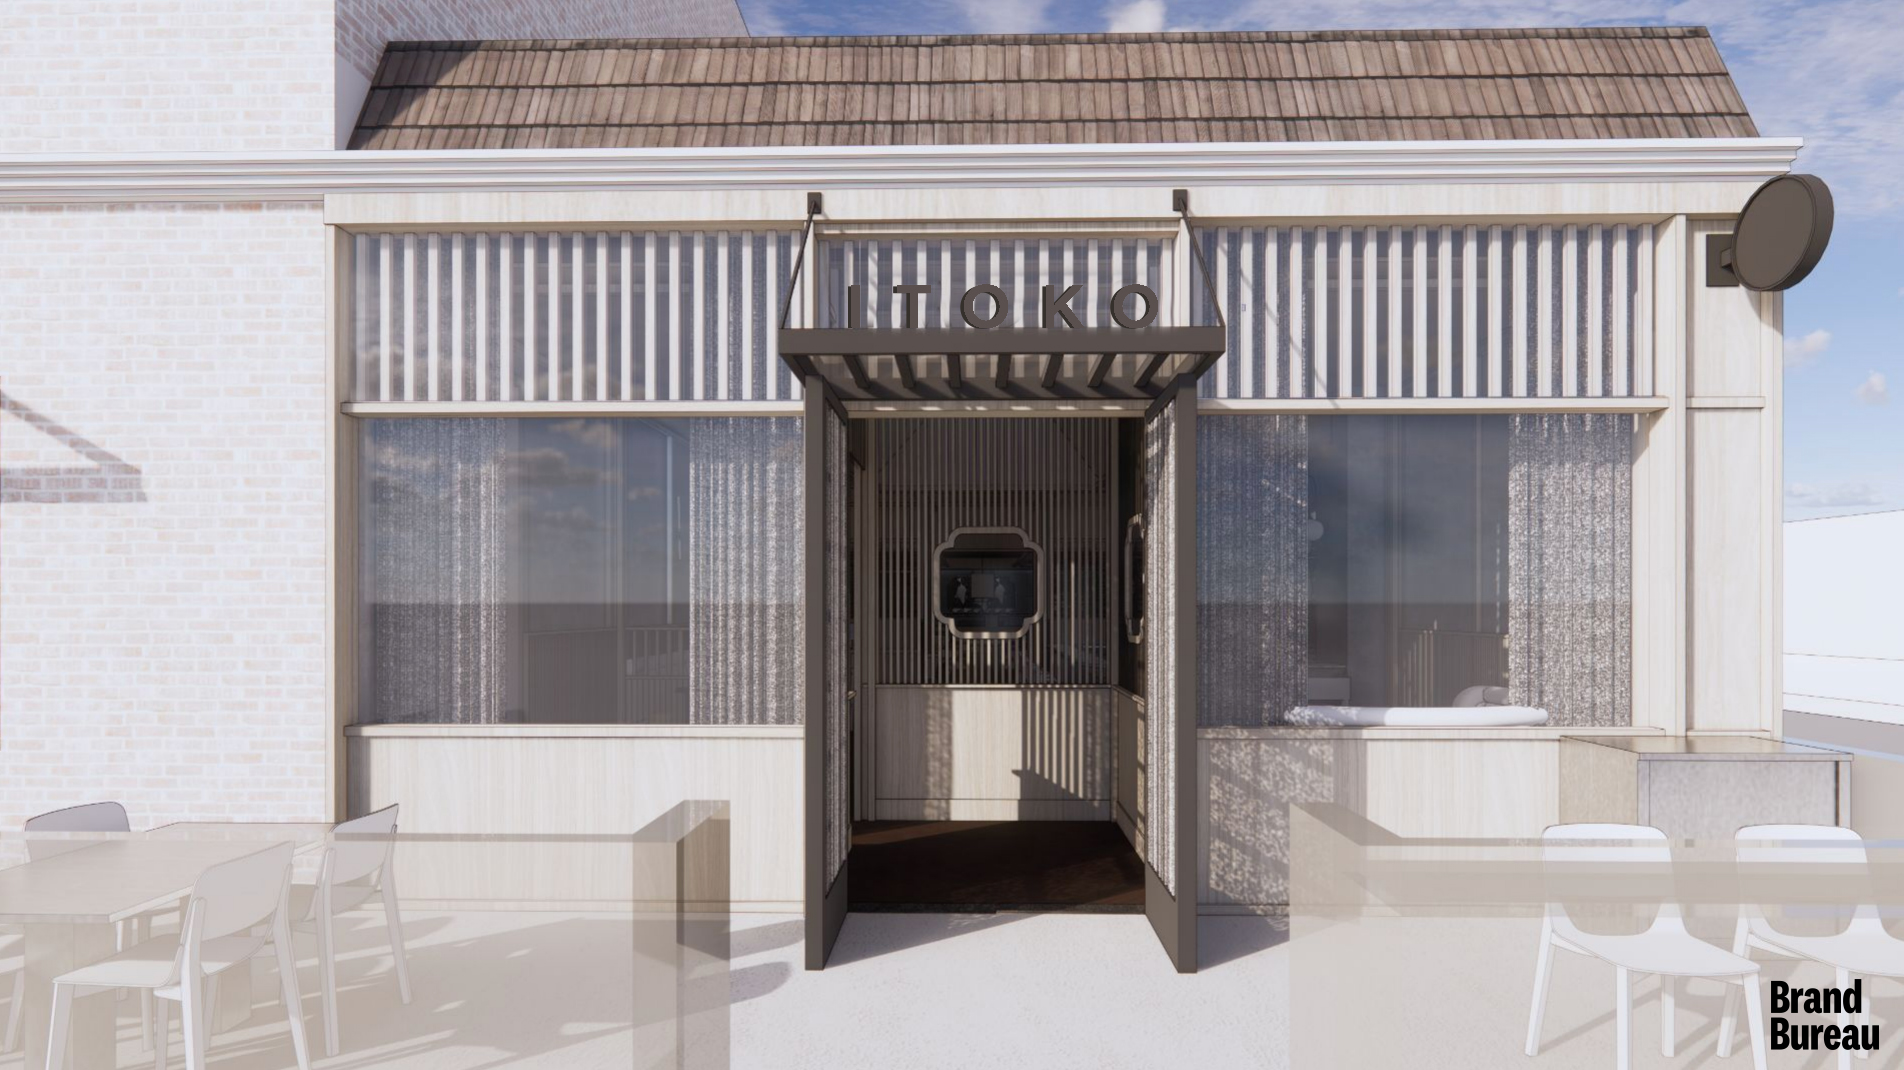 A digital rendering of a restaurant’s exterior.